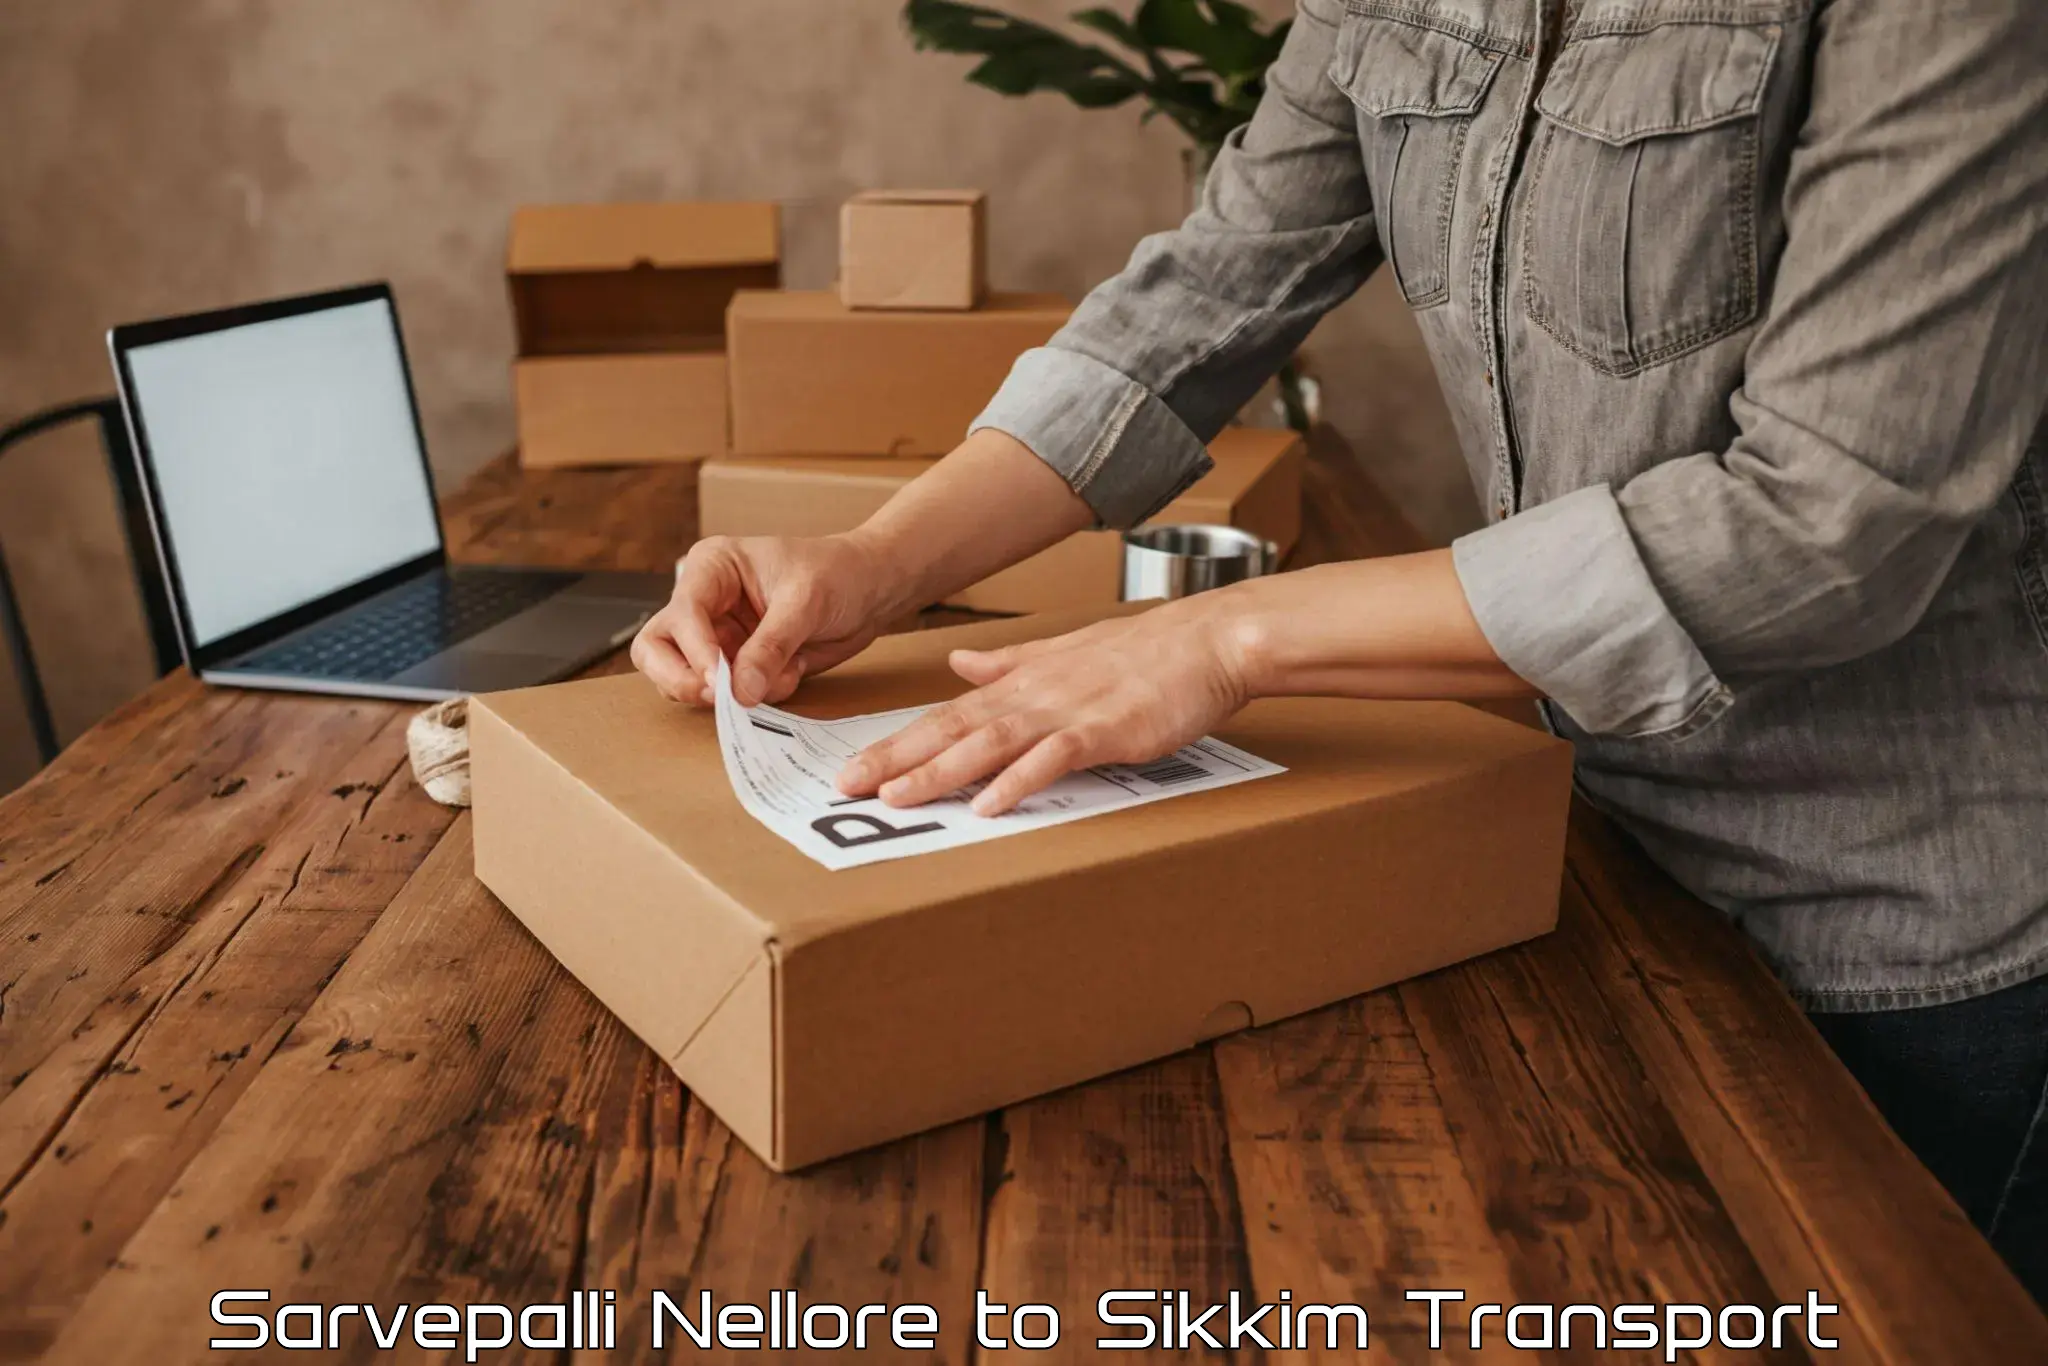 Commercial transport service Sarvepalli Nellore to North Sikkim